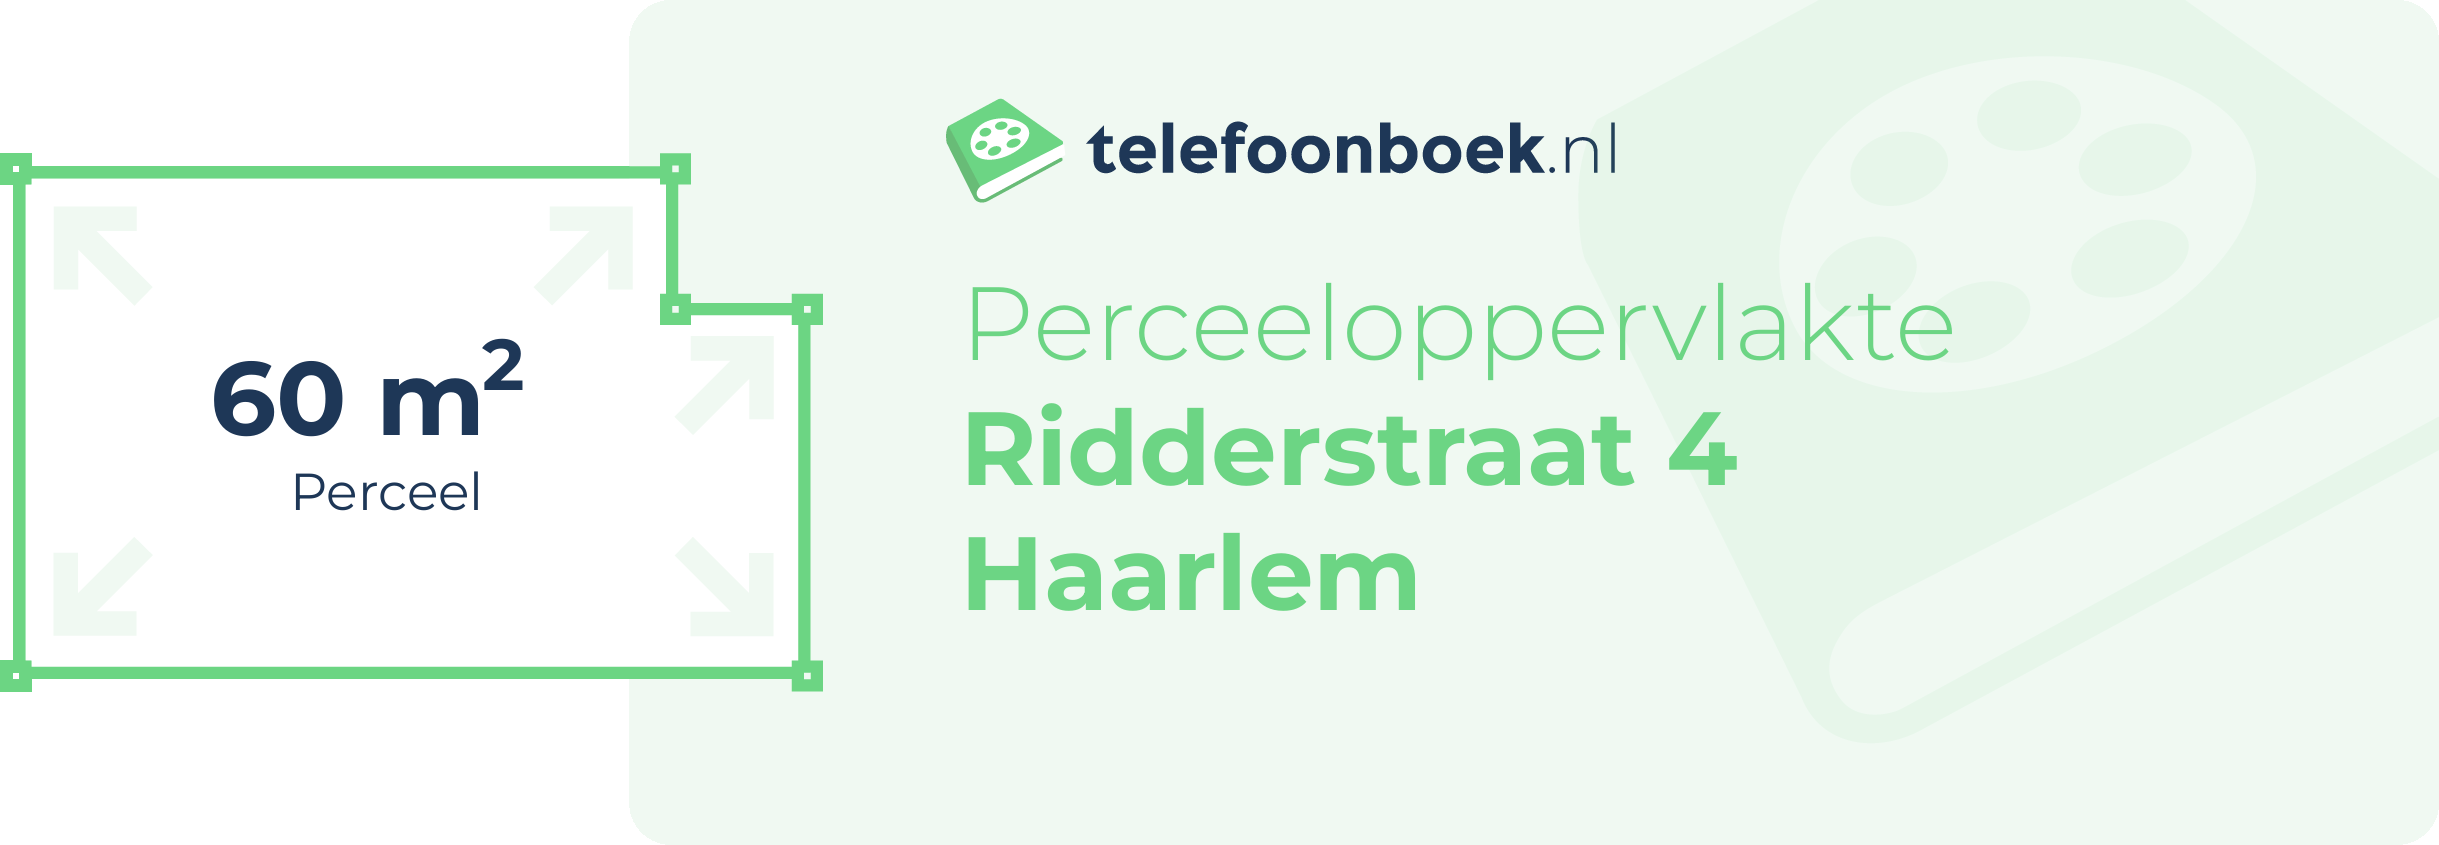 Perceeloppervlakte Ridderstraat 4 Haarlem